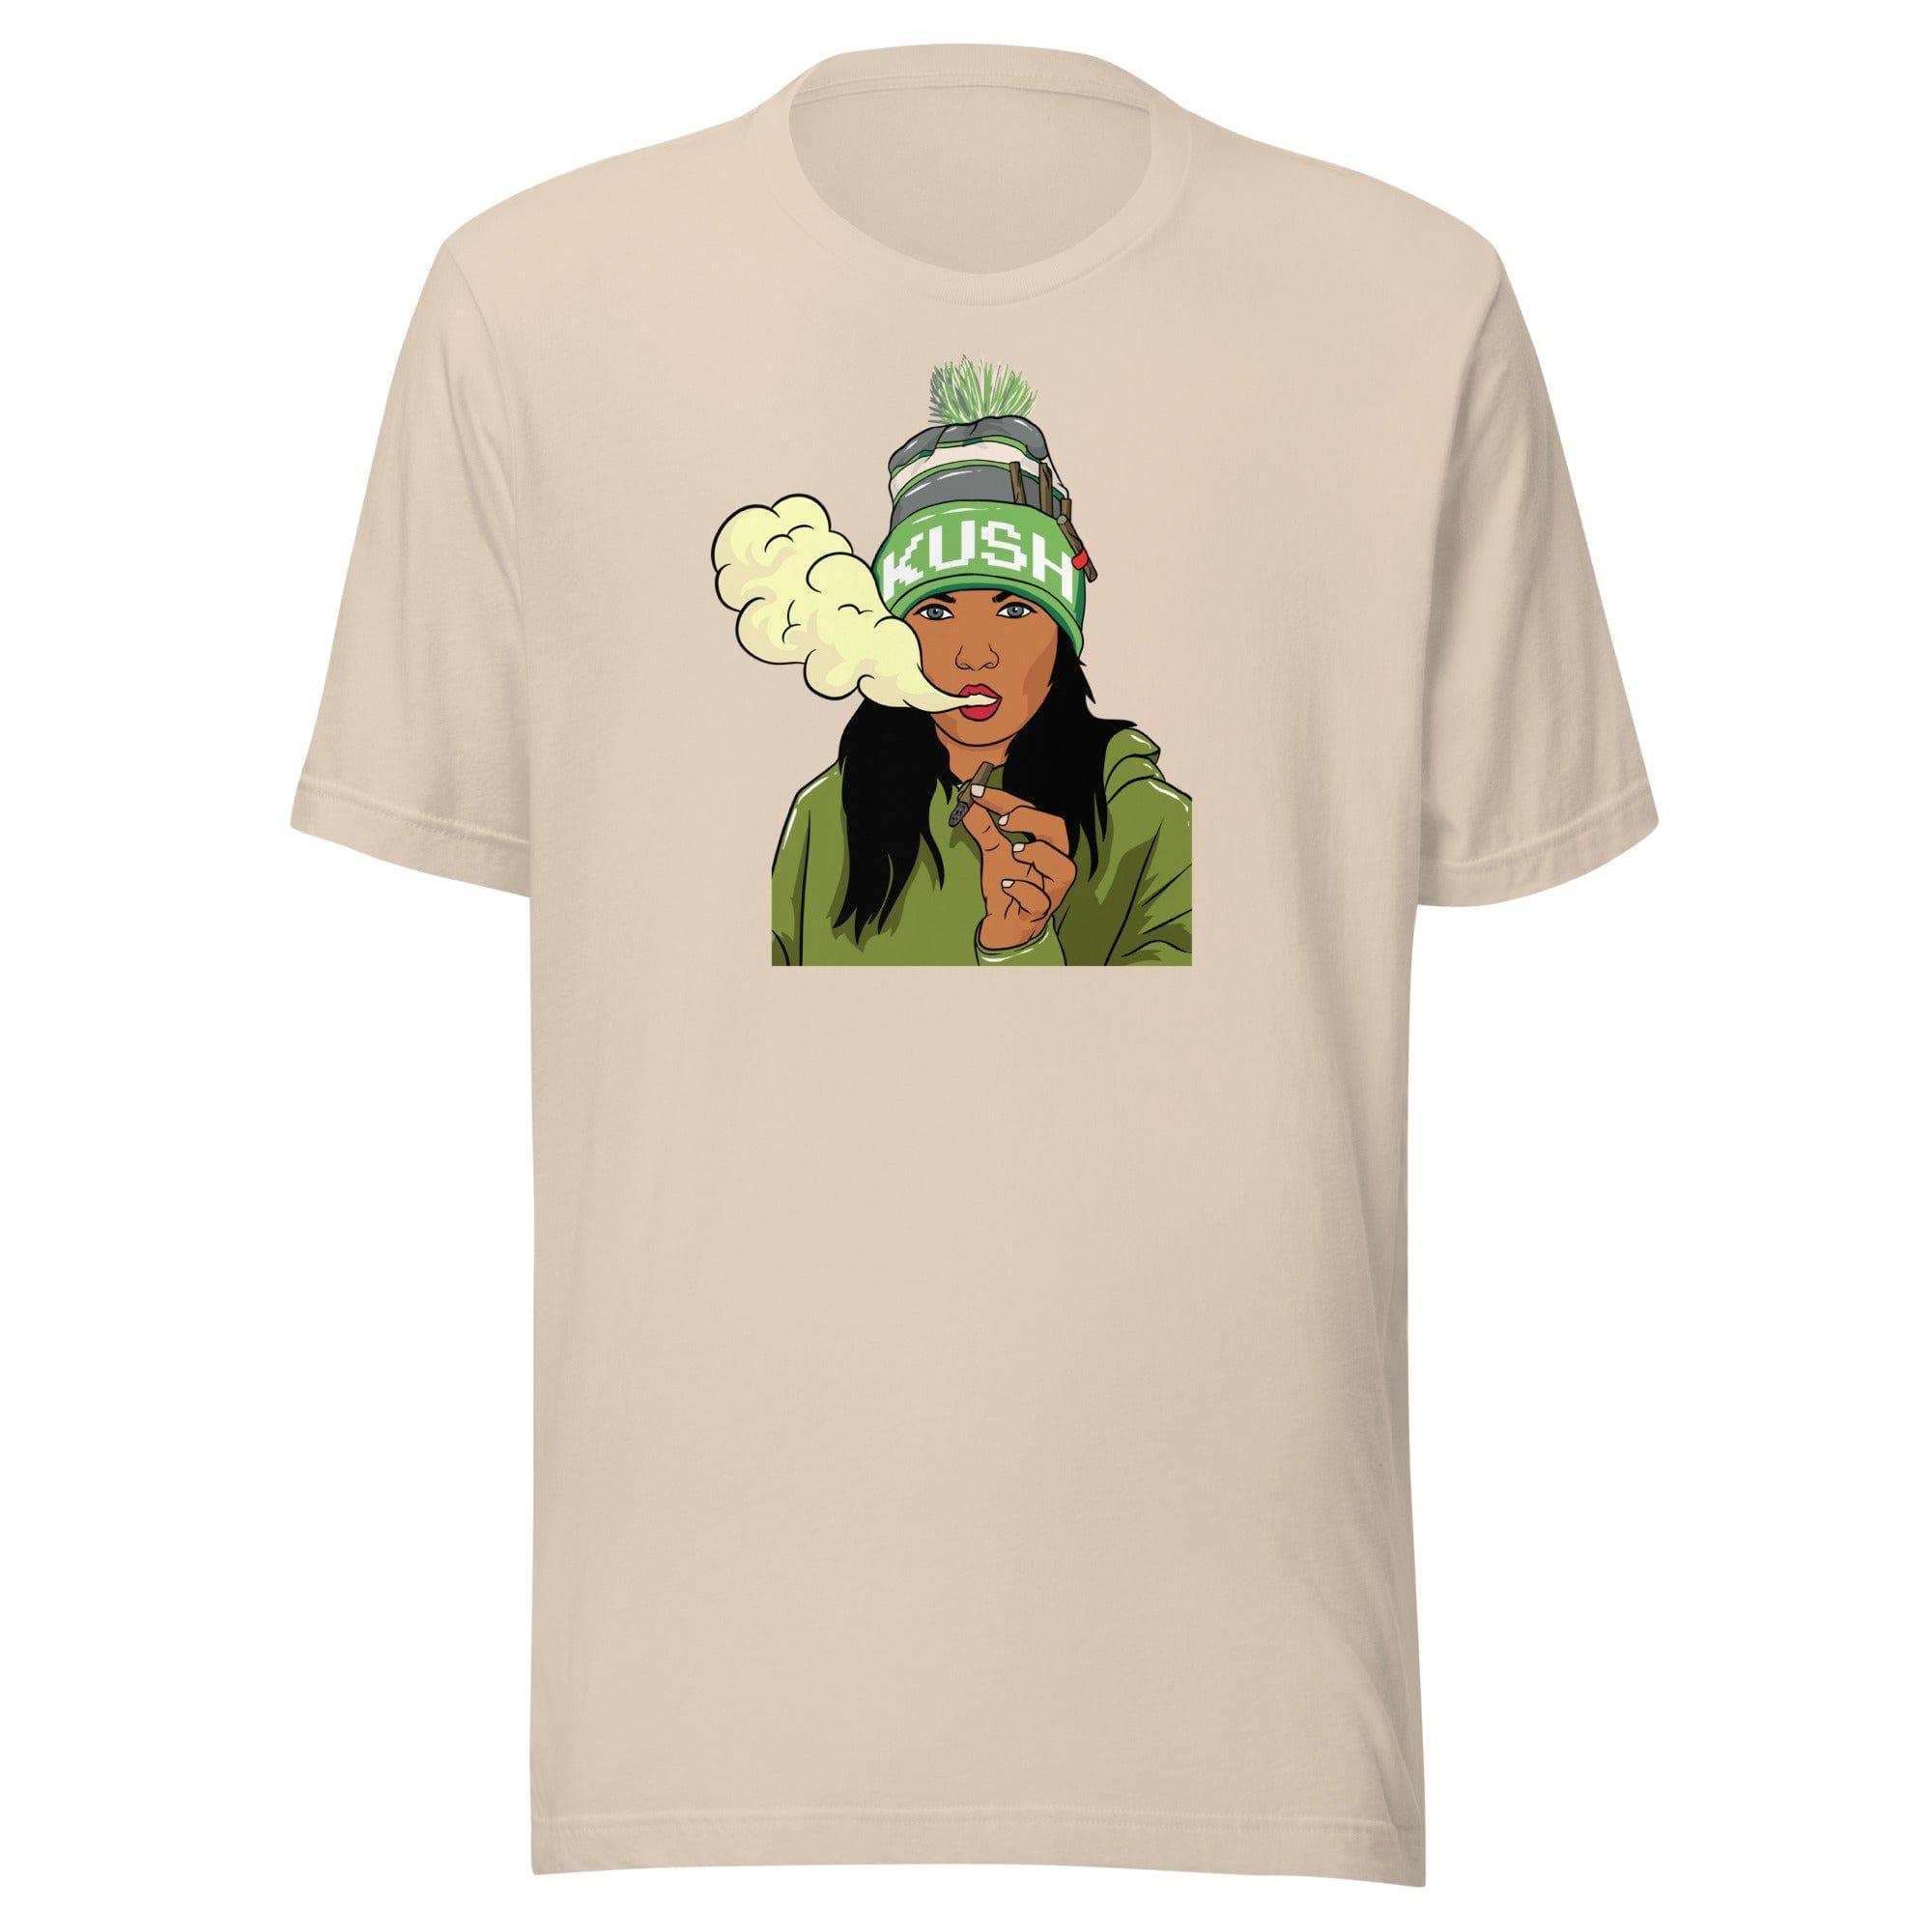 Marijuana T-shirt Sexy Women Blowing Smoke from Blunt Wearing Kush Hat Short Sleeve Unisex Top - TopKoalaTee